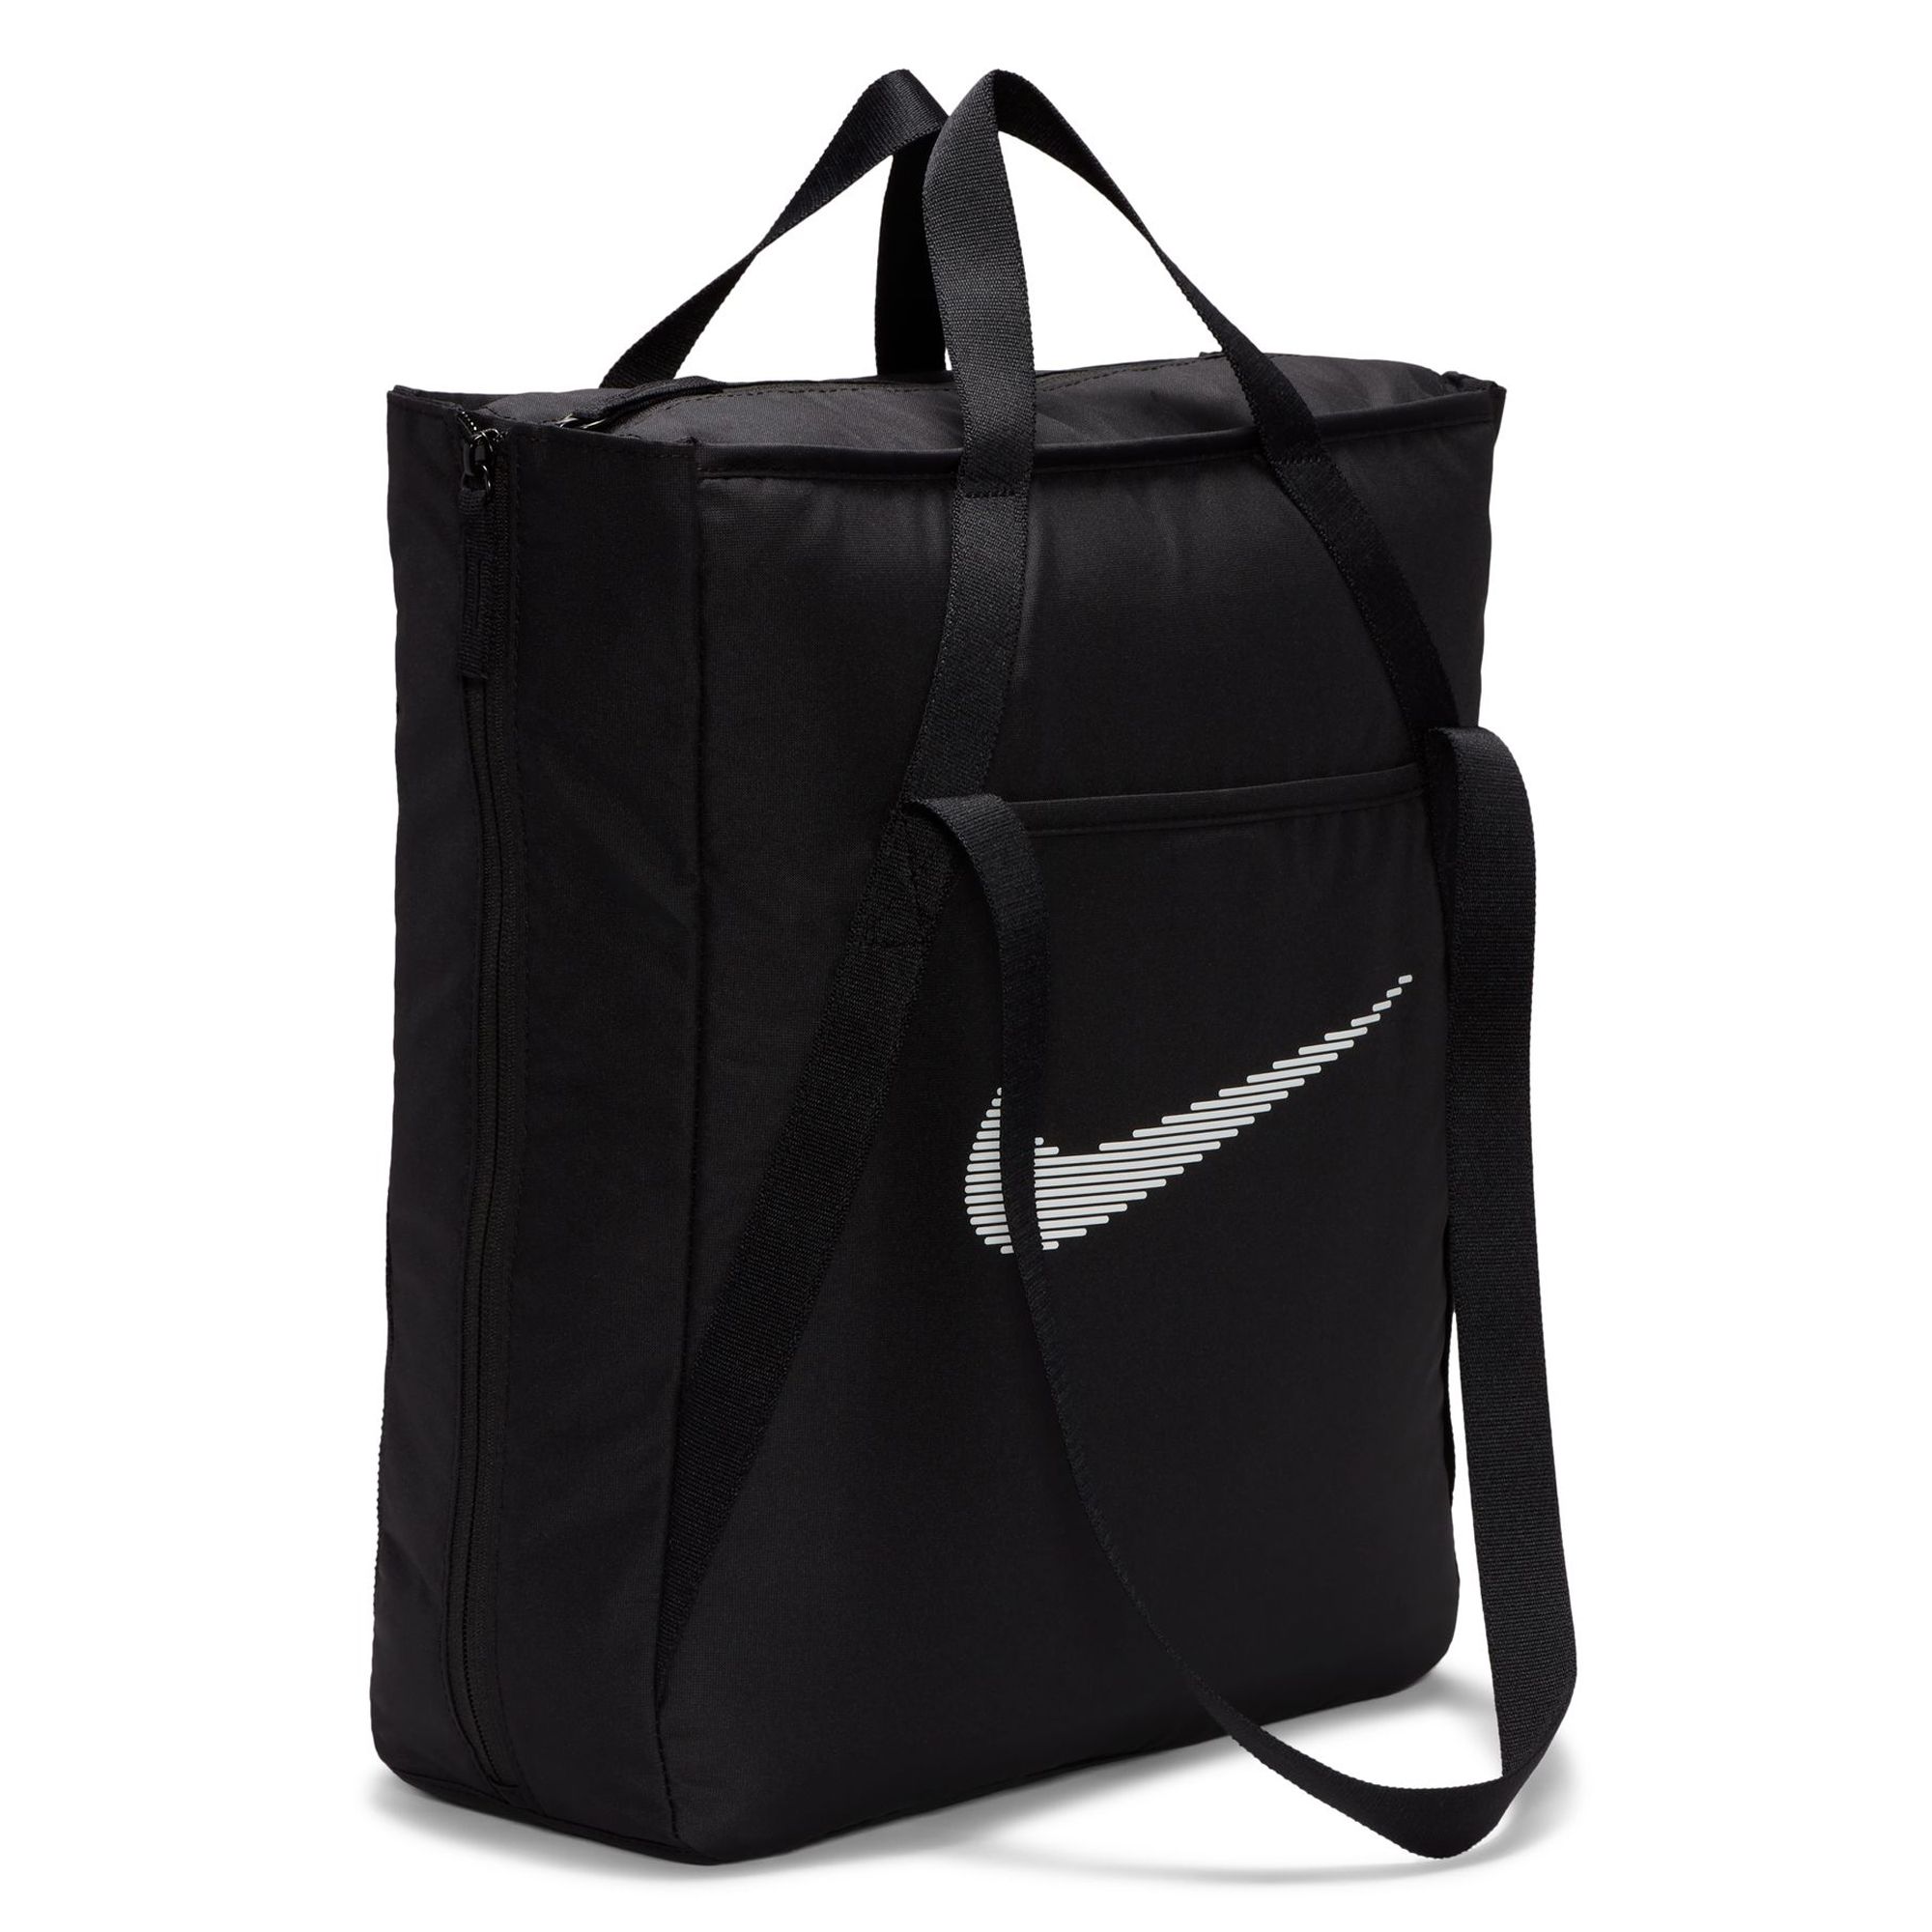 Nike Gym tote in black